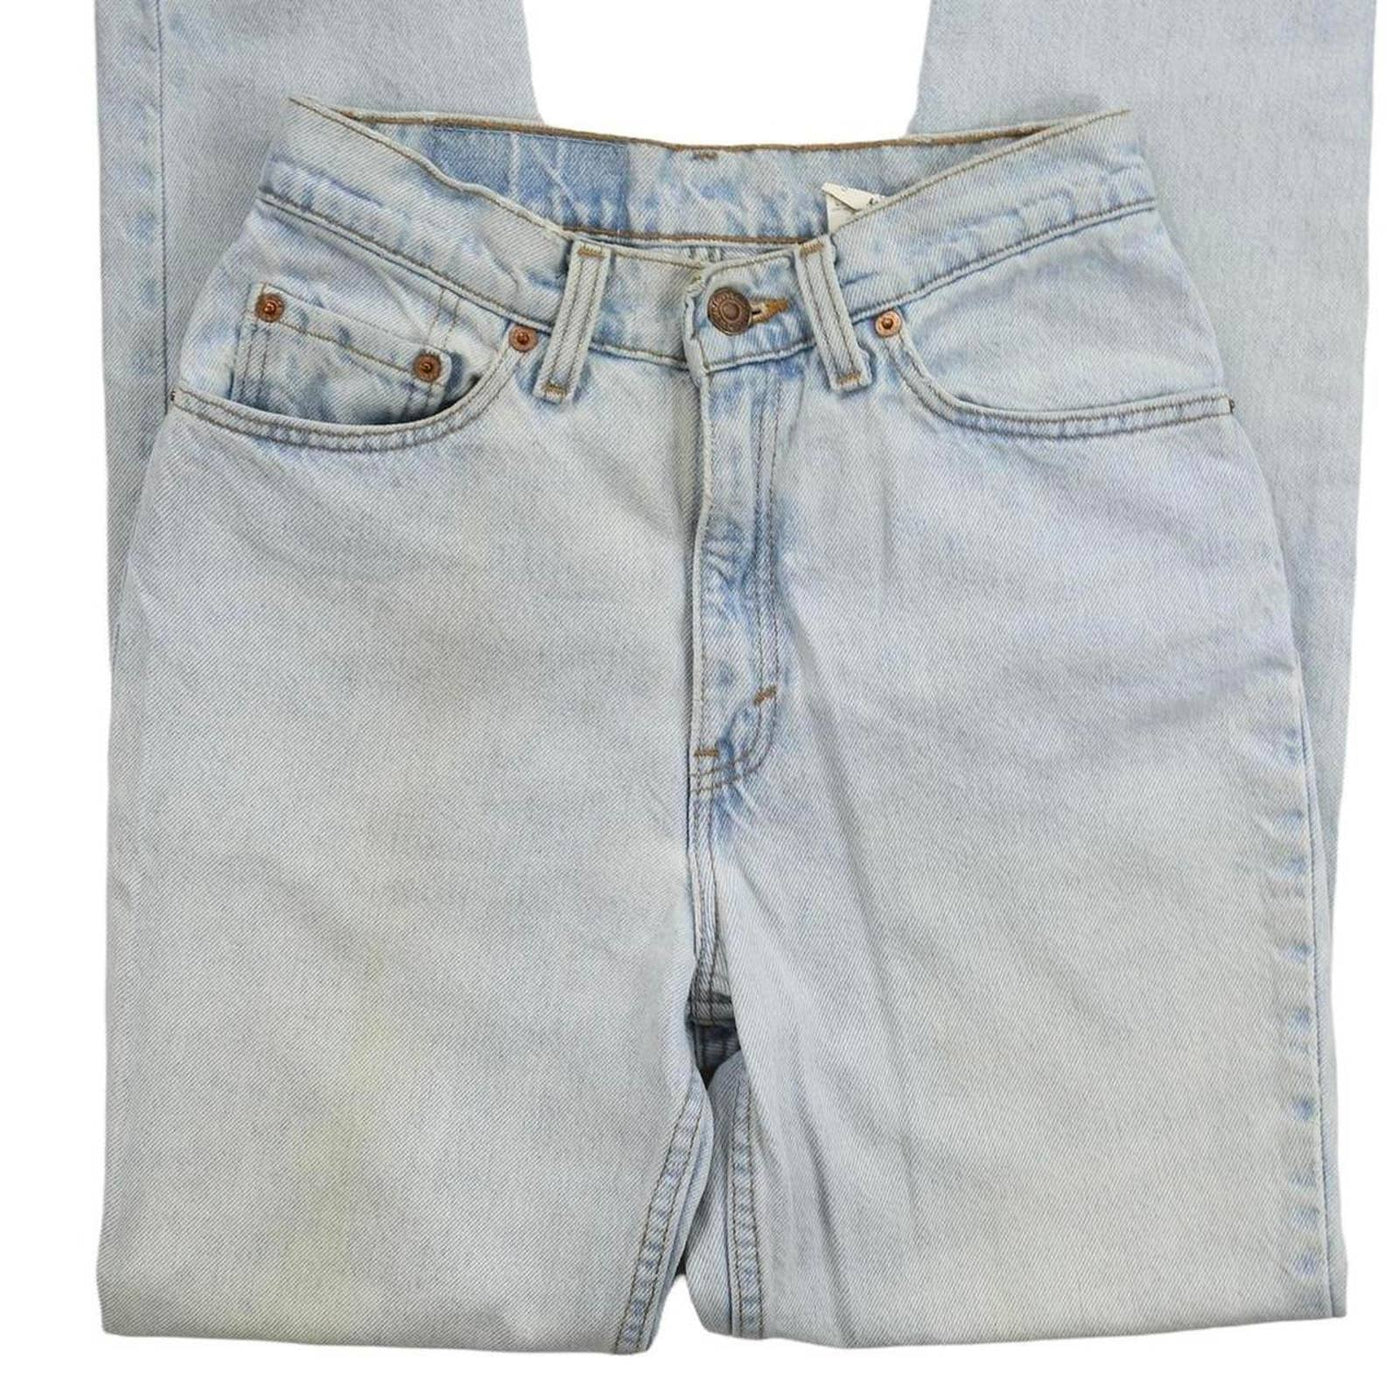 Vintage Levis W24/25 512 Light-Medium Wash High Waisted Jeans